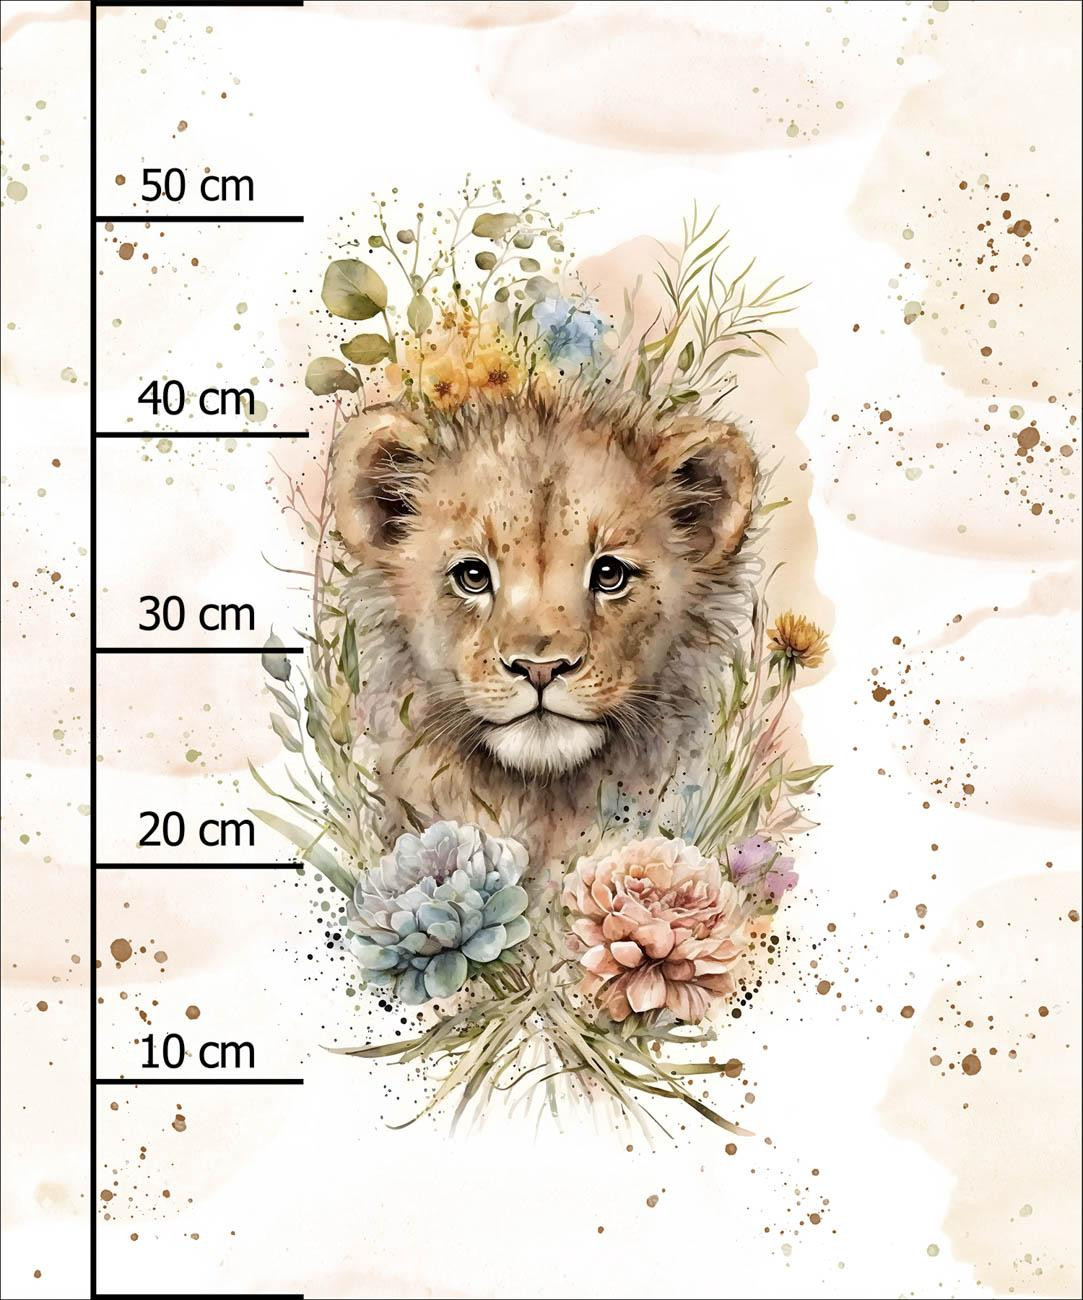 BABY LION - Paneel (60cm x 50cm) Wintersweat angeraut mit Elastan ITY